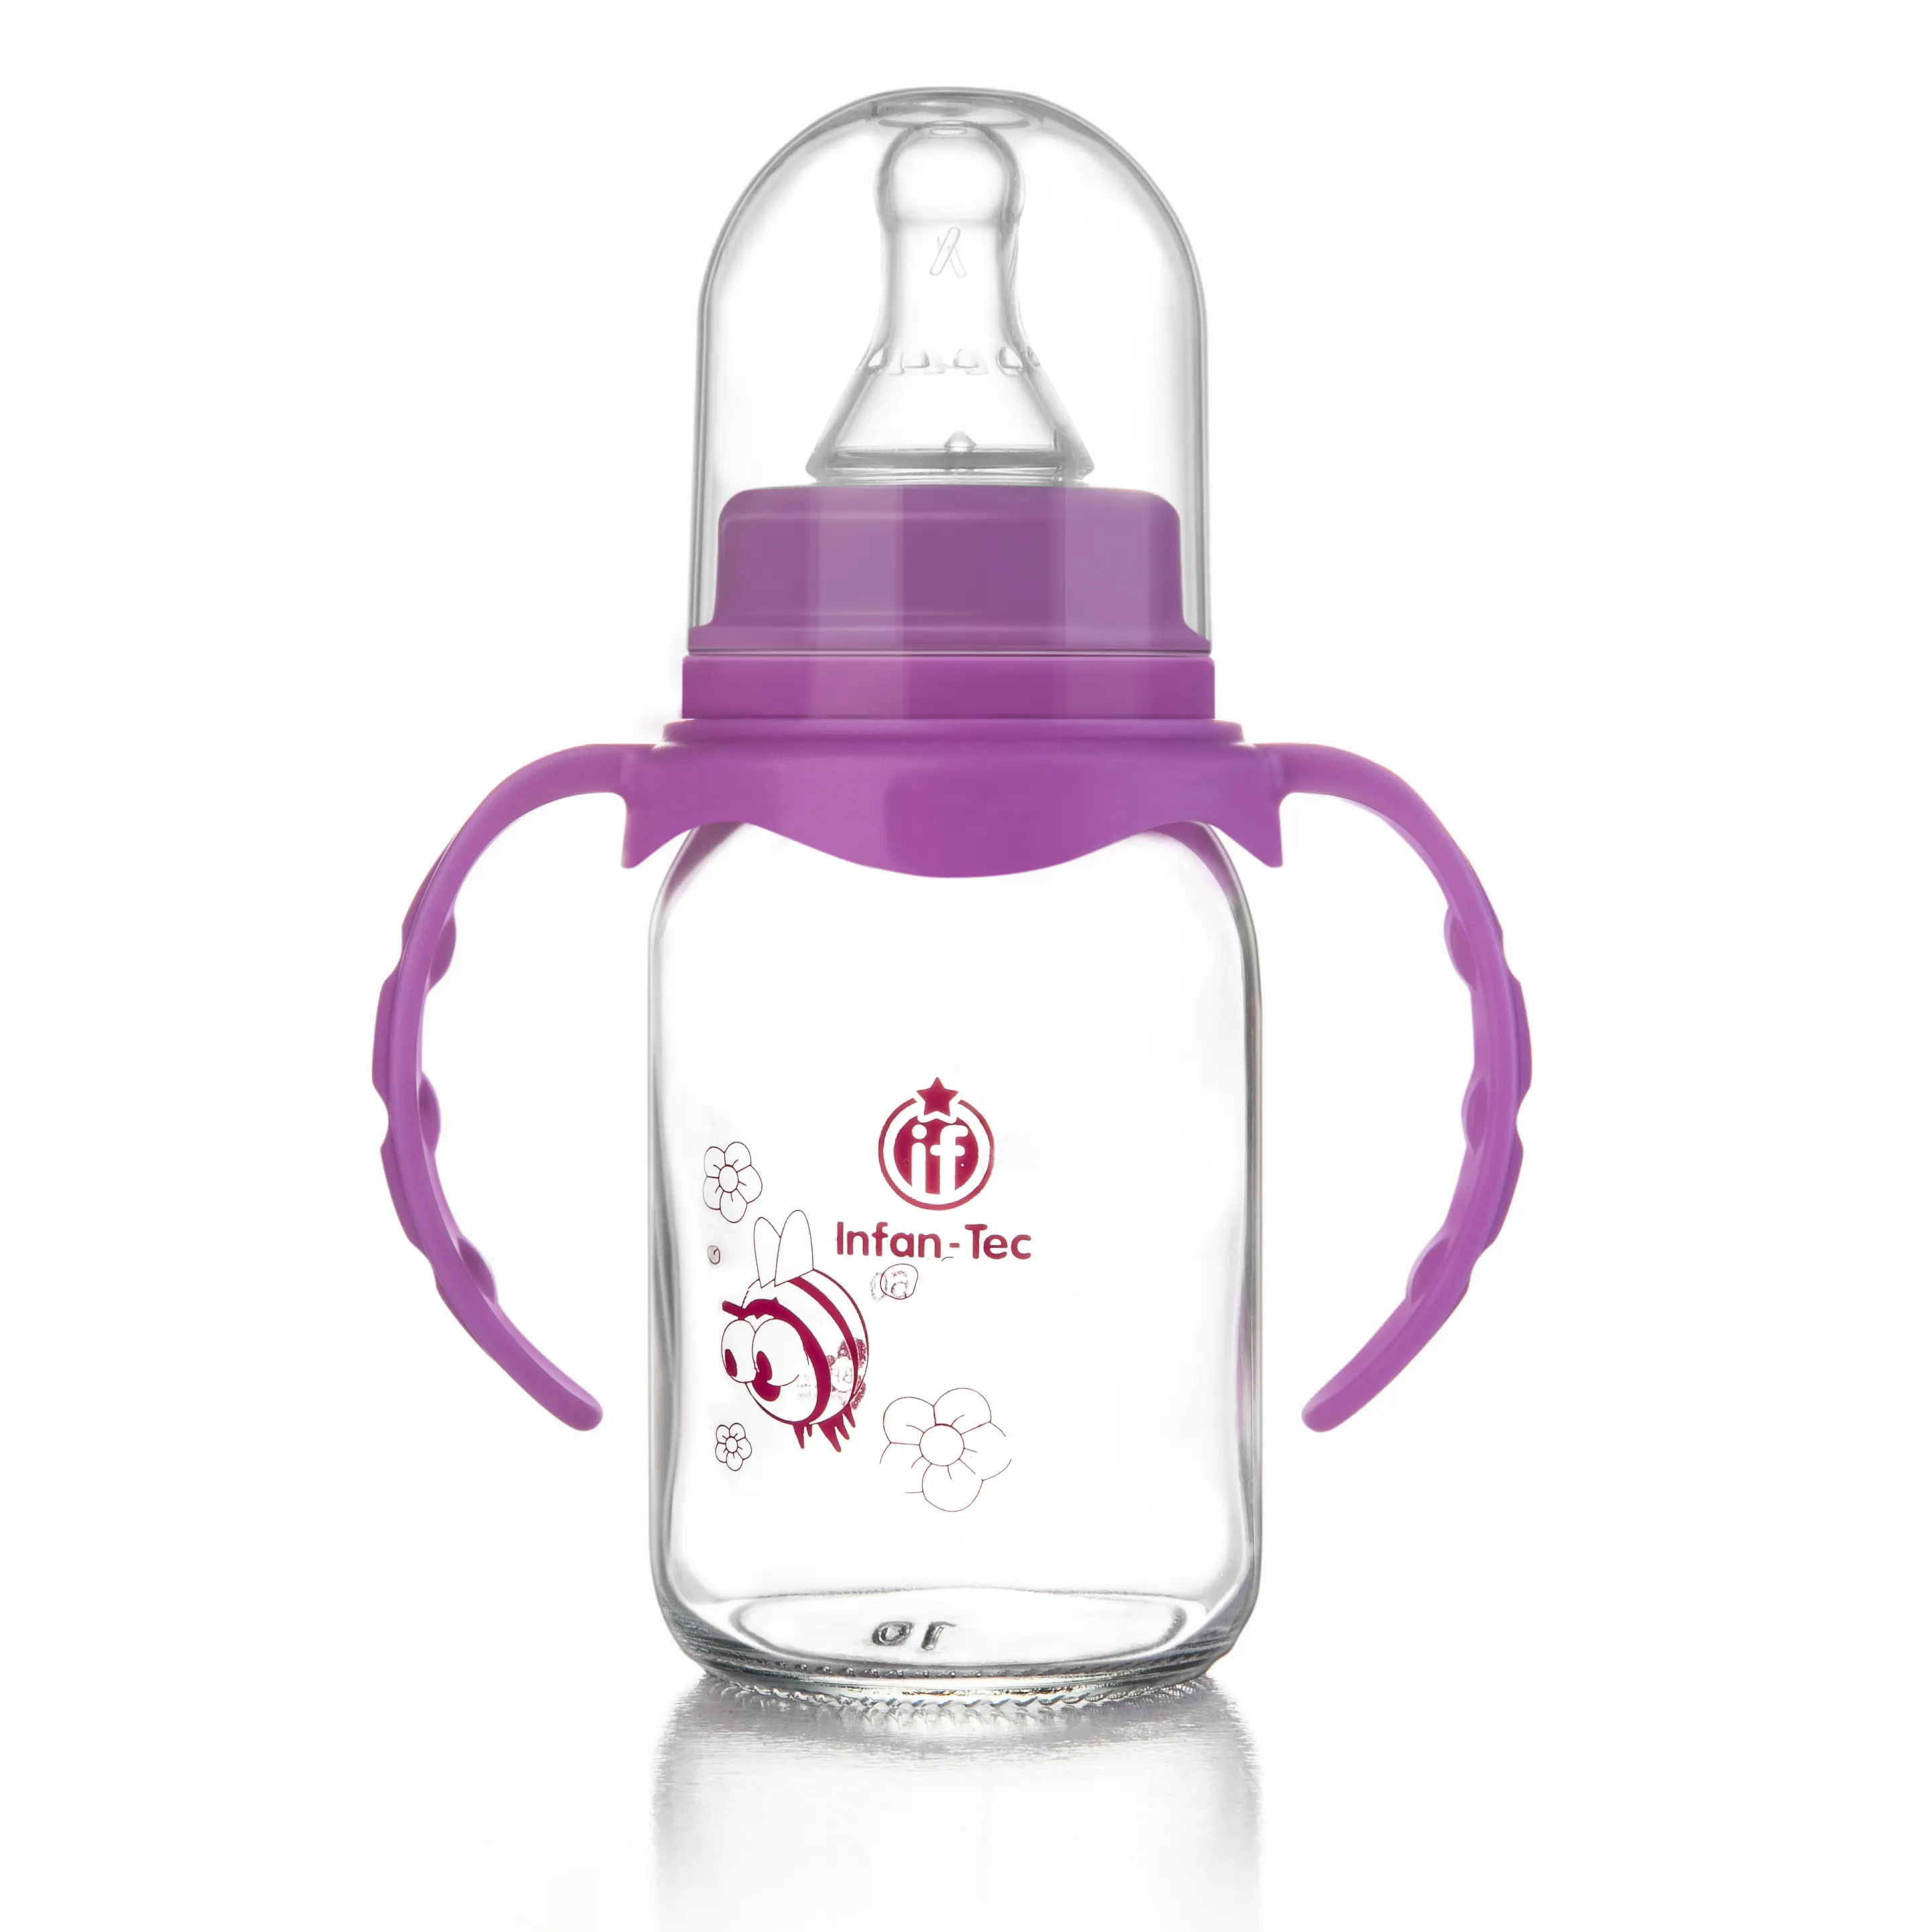 High quality 5oz/150ml glass baby feeding milk bottle with silicone nipple